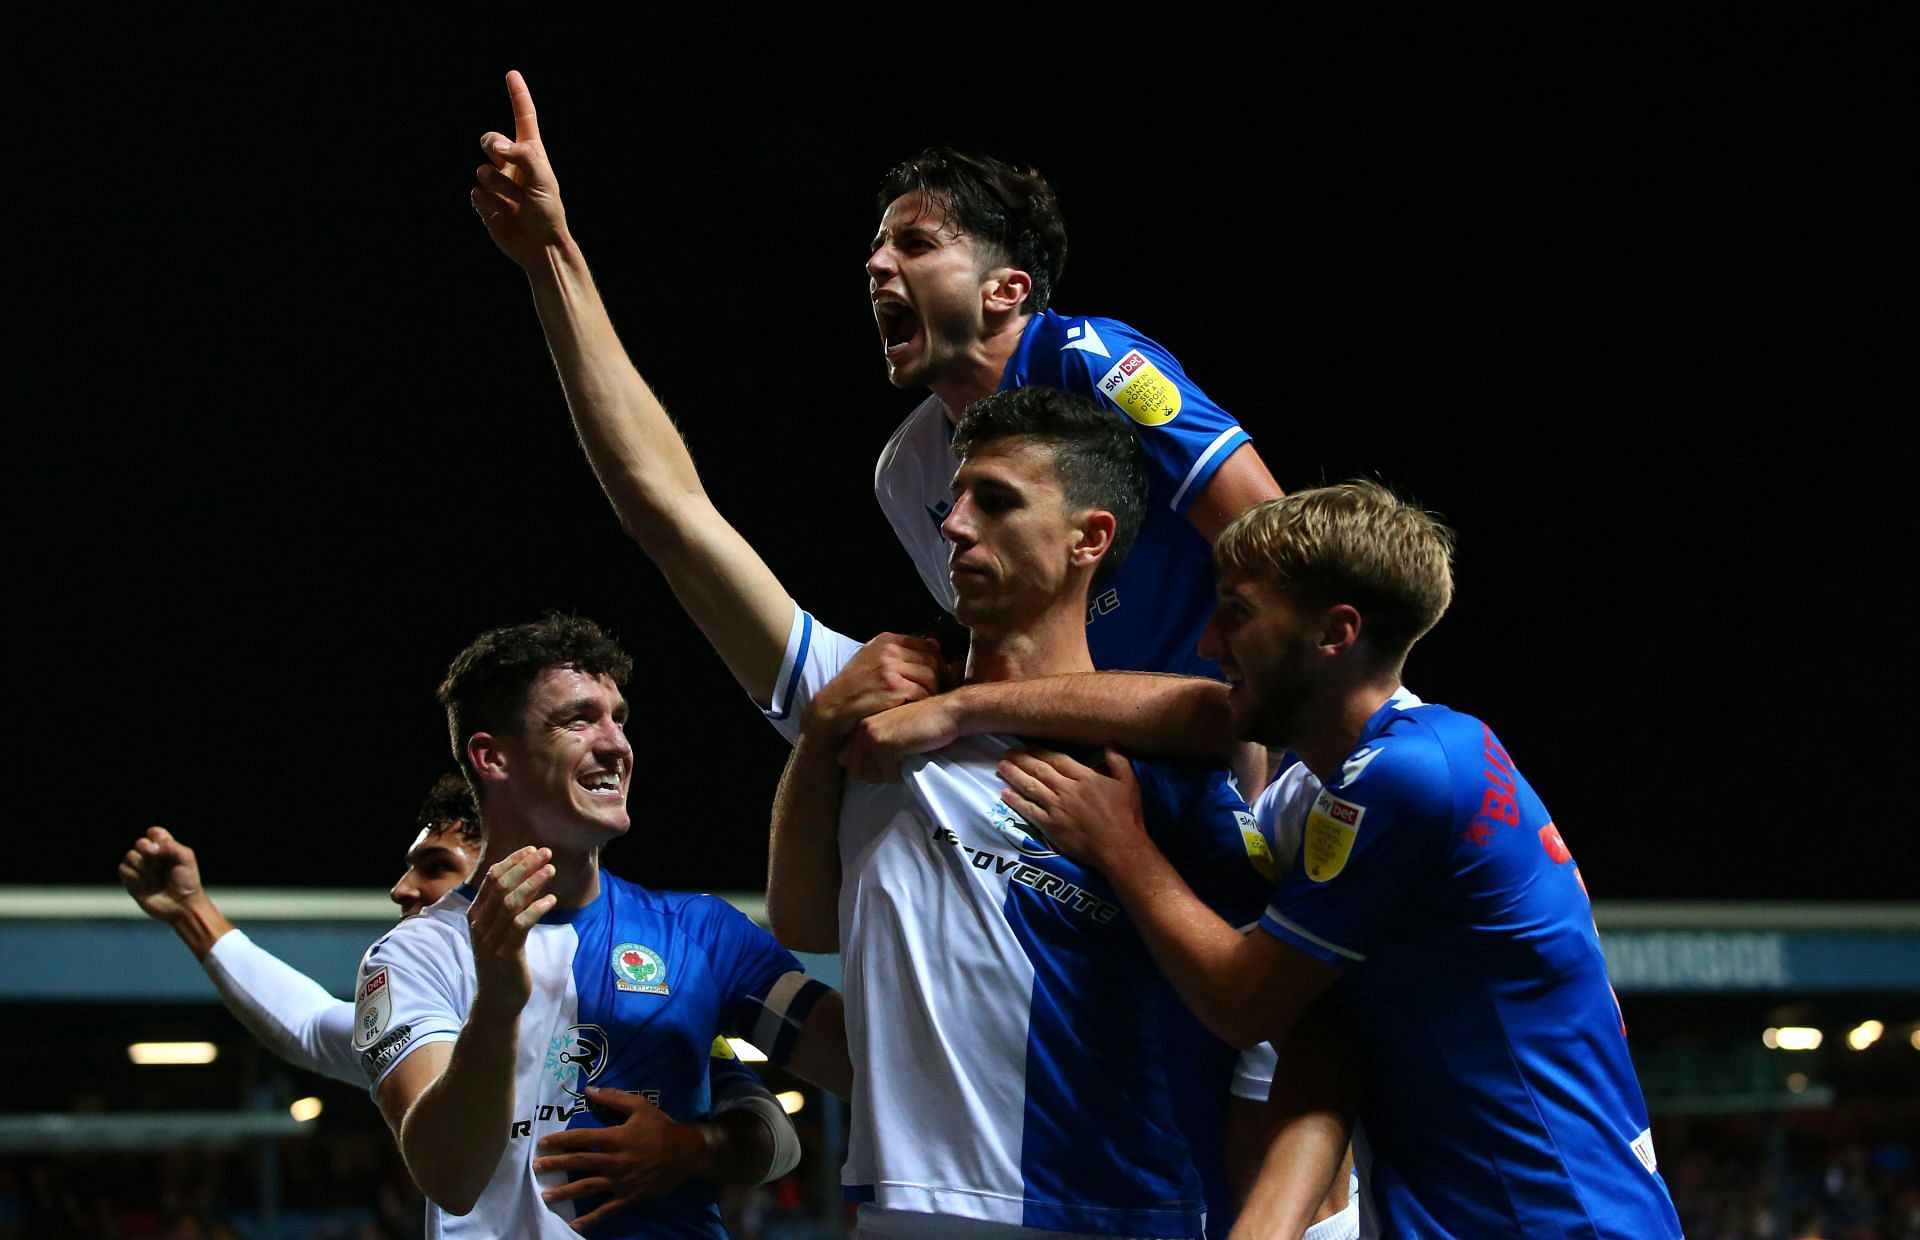 Blackburn Rovers will face Bristol City on Saturday